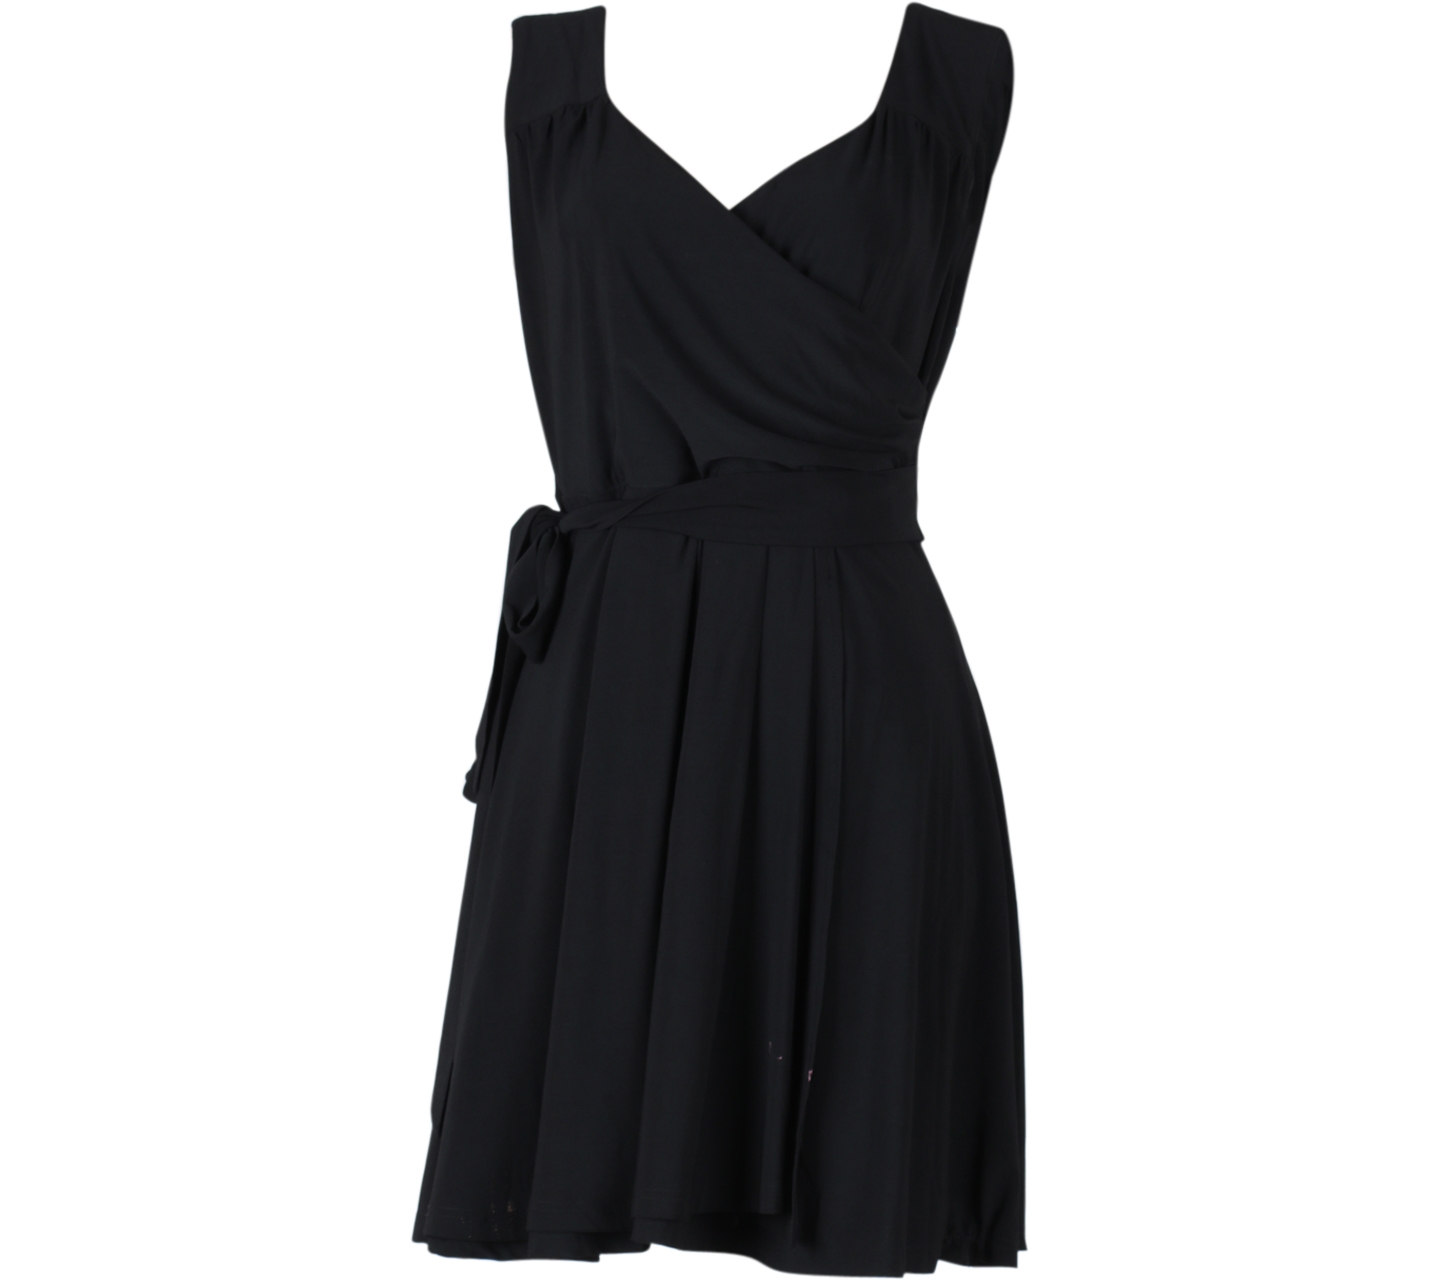 Arithalia Black Mini Dress